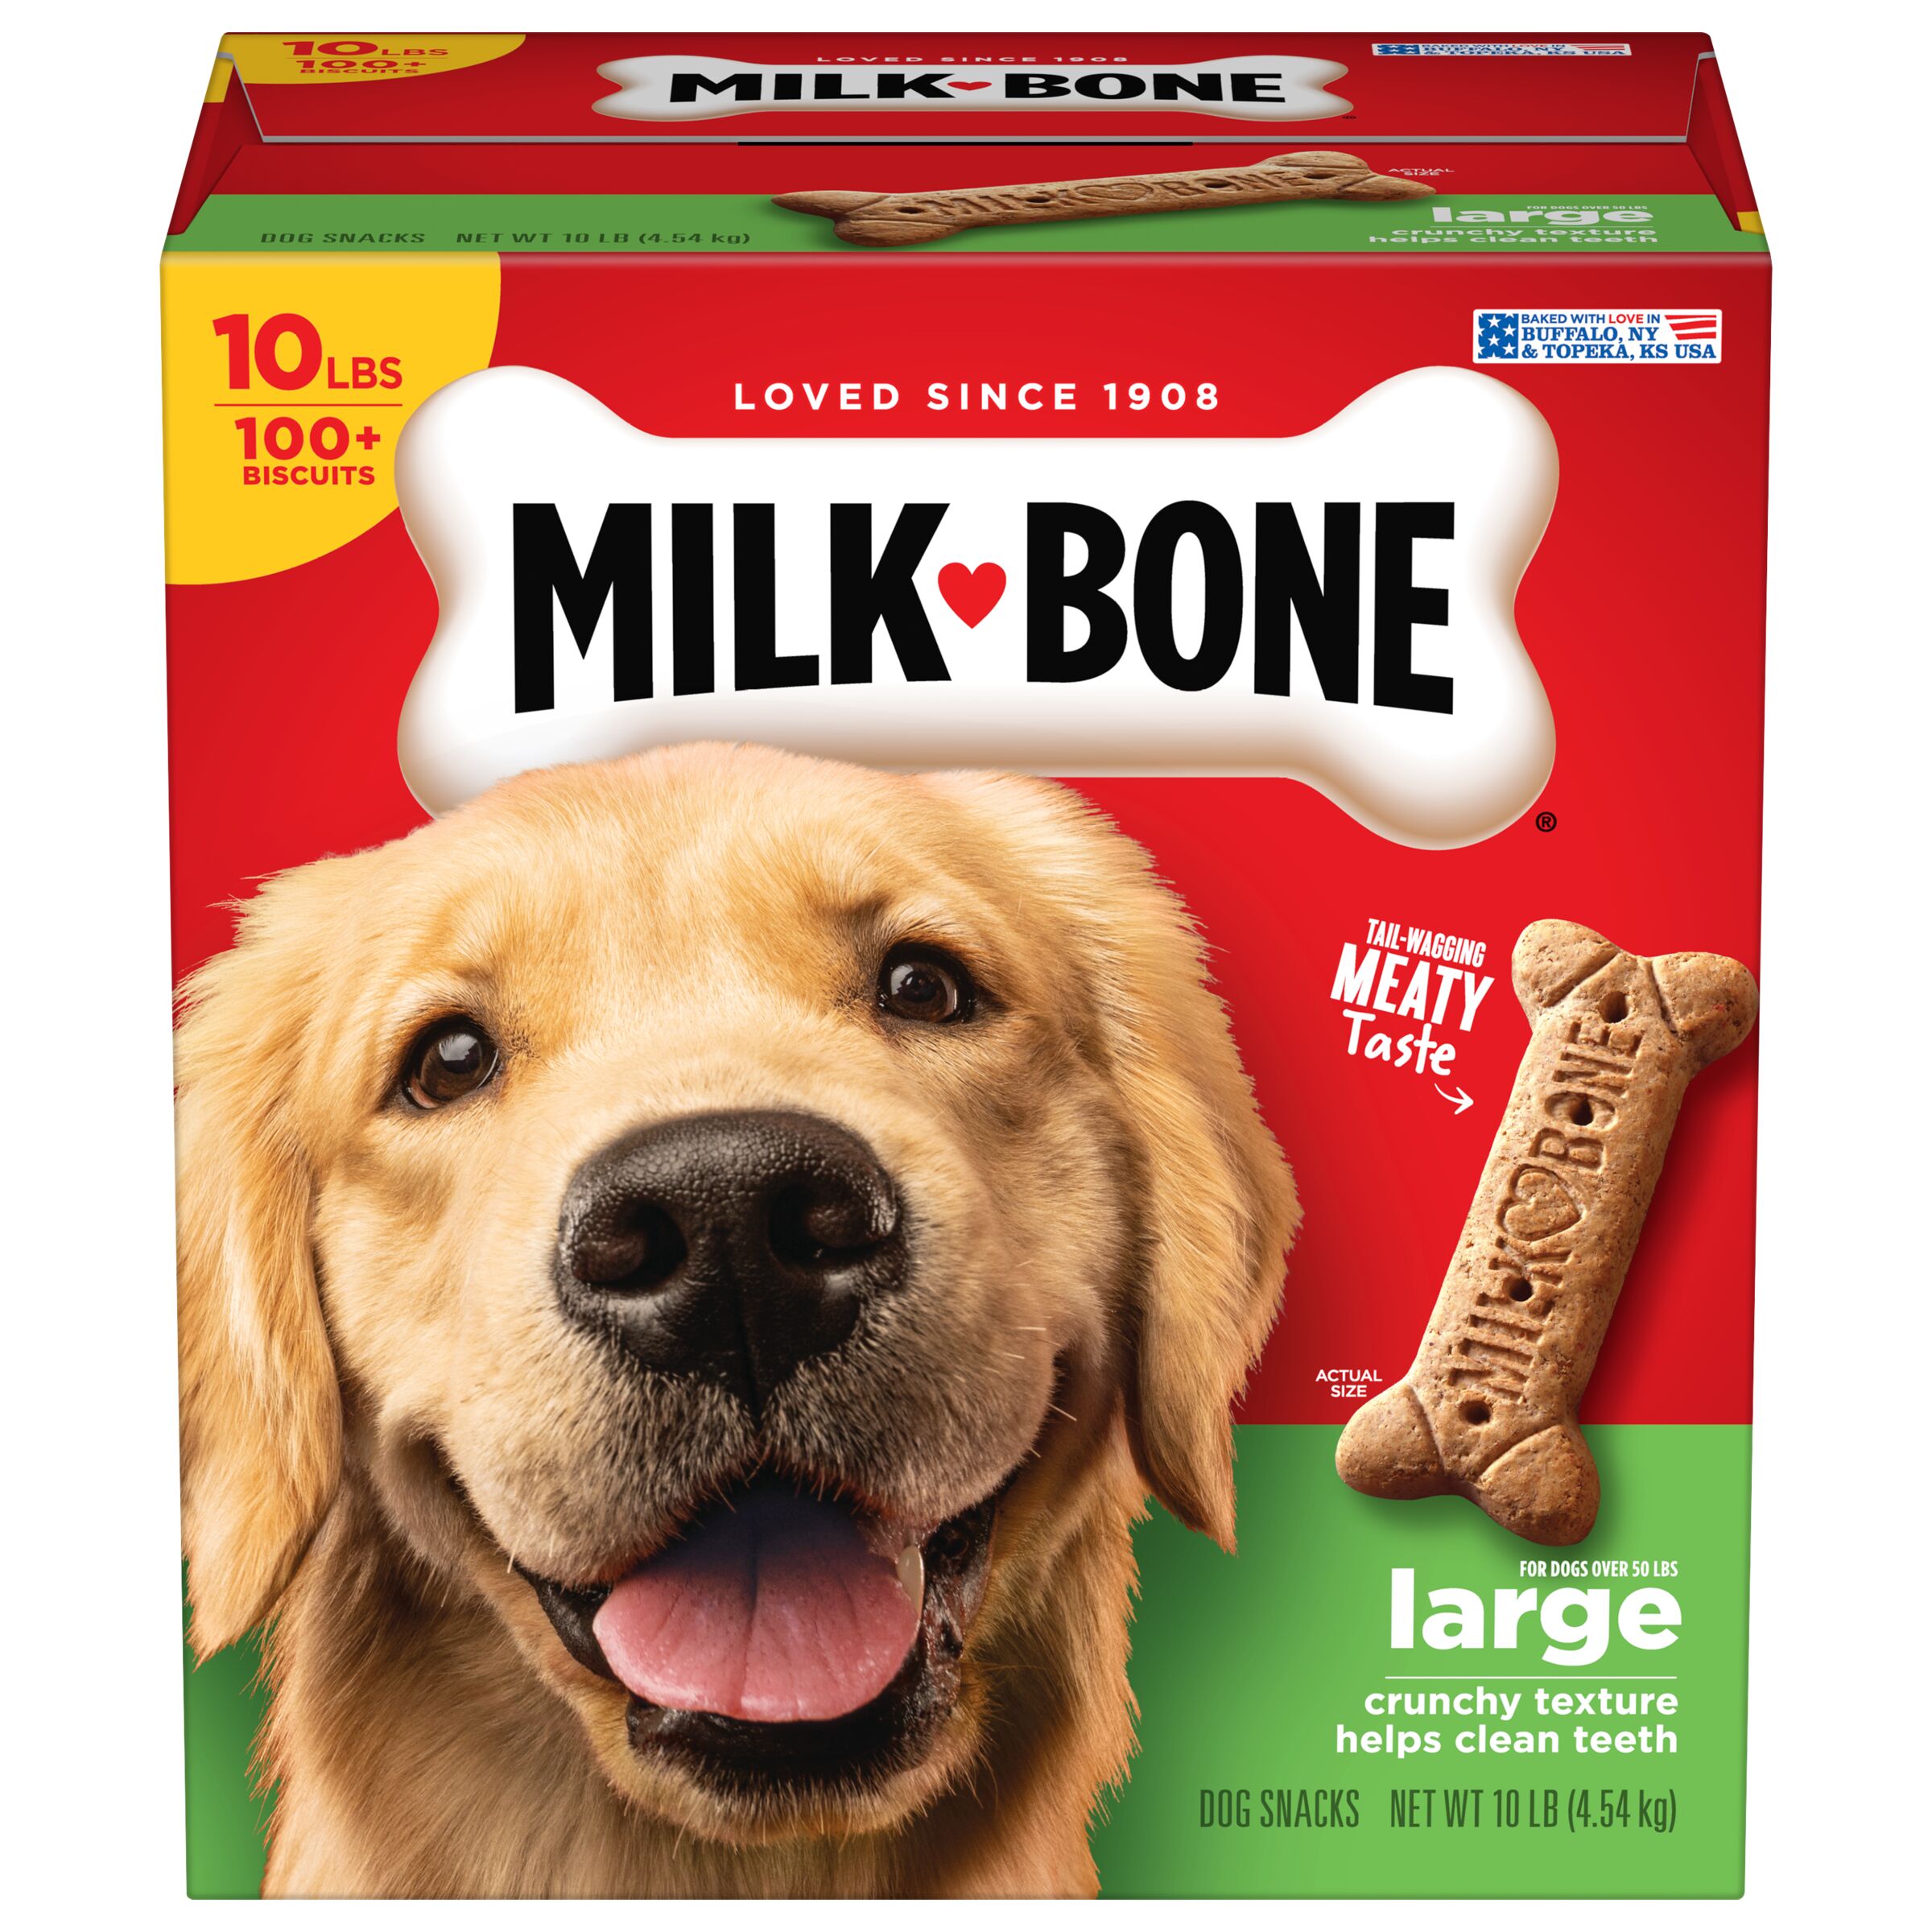 Milk-Bone Original Dog Biscuits, Large Crunchy Dog Treats, 10 lbs. - image 1 of 11